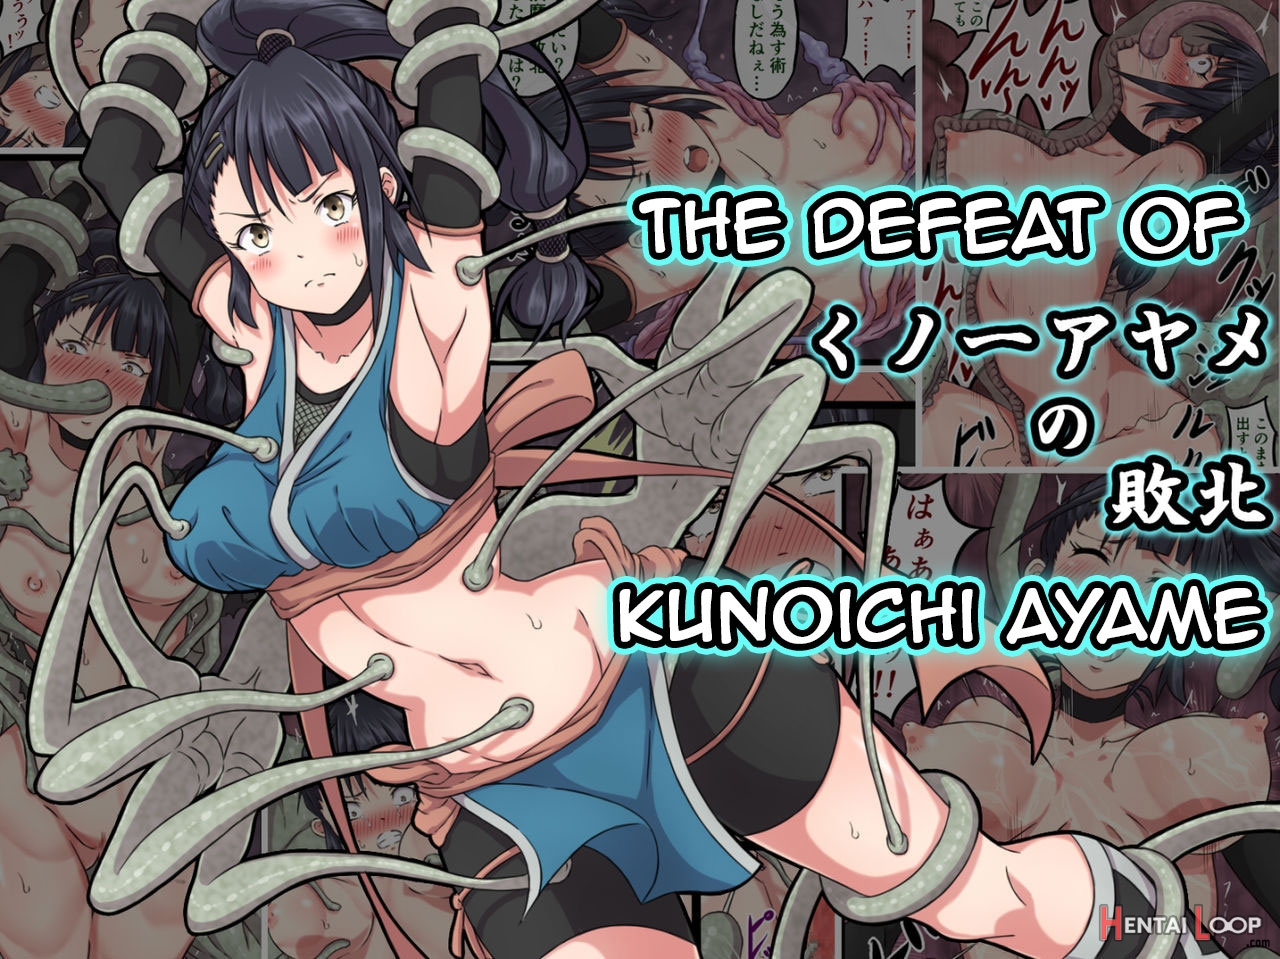 The Defeat Of Ayame Kunoichi page 1